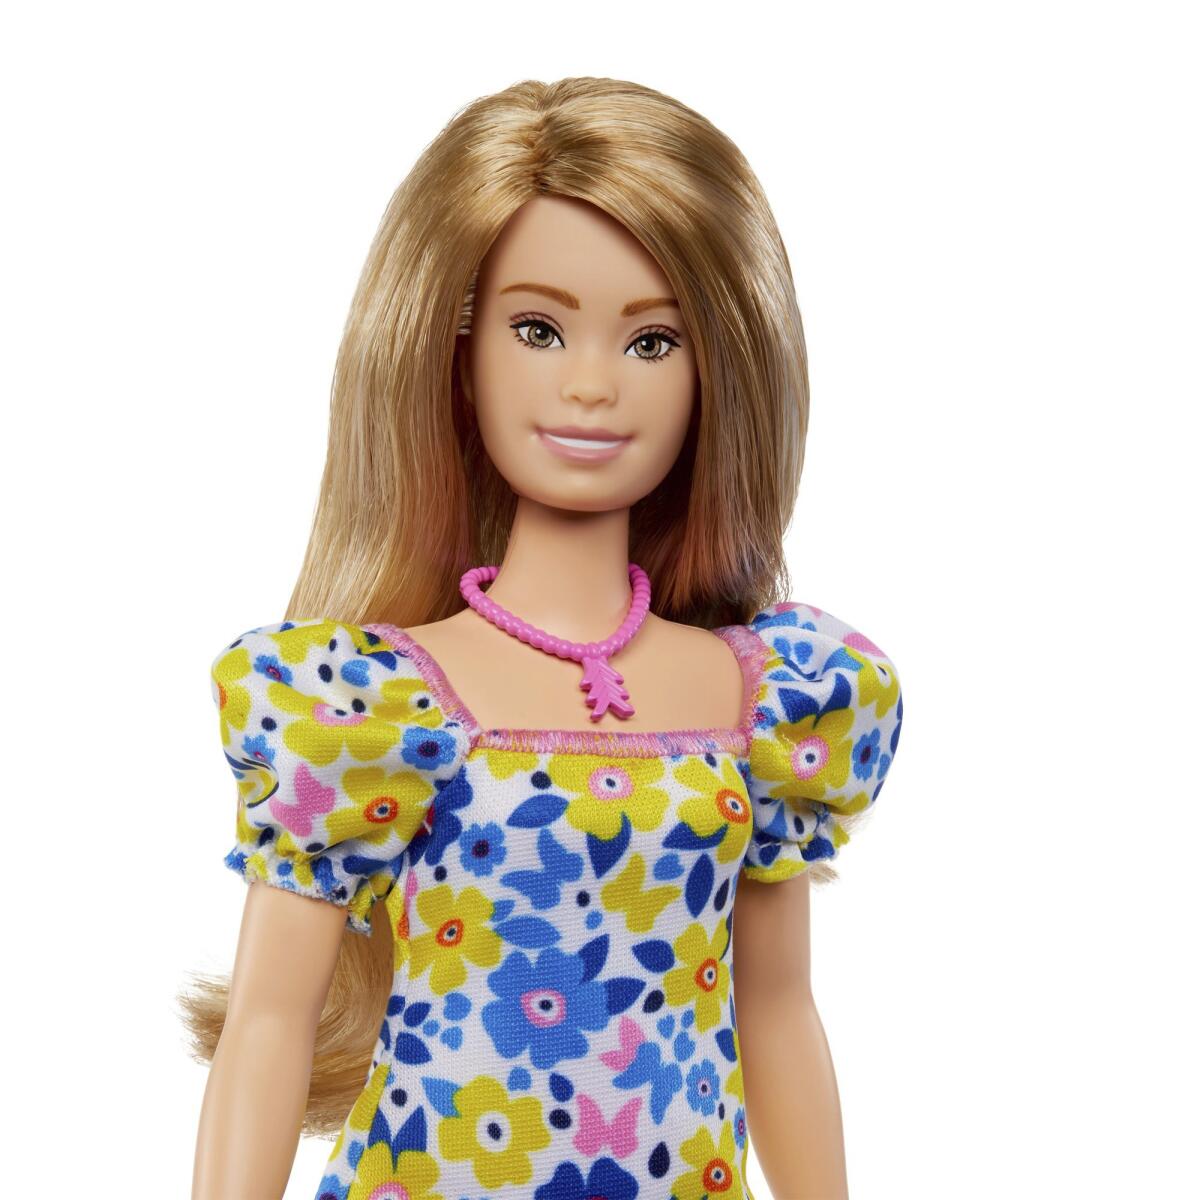  la primera muñeca Barbie que representa a una persona con síndrome de Down. (Mattel, Inc. via AP)